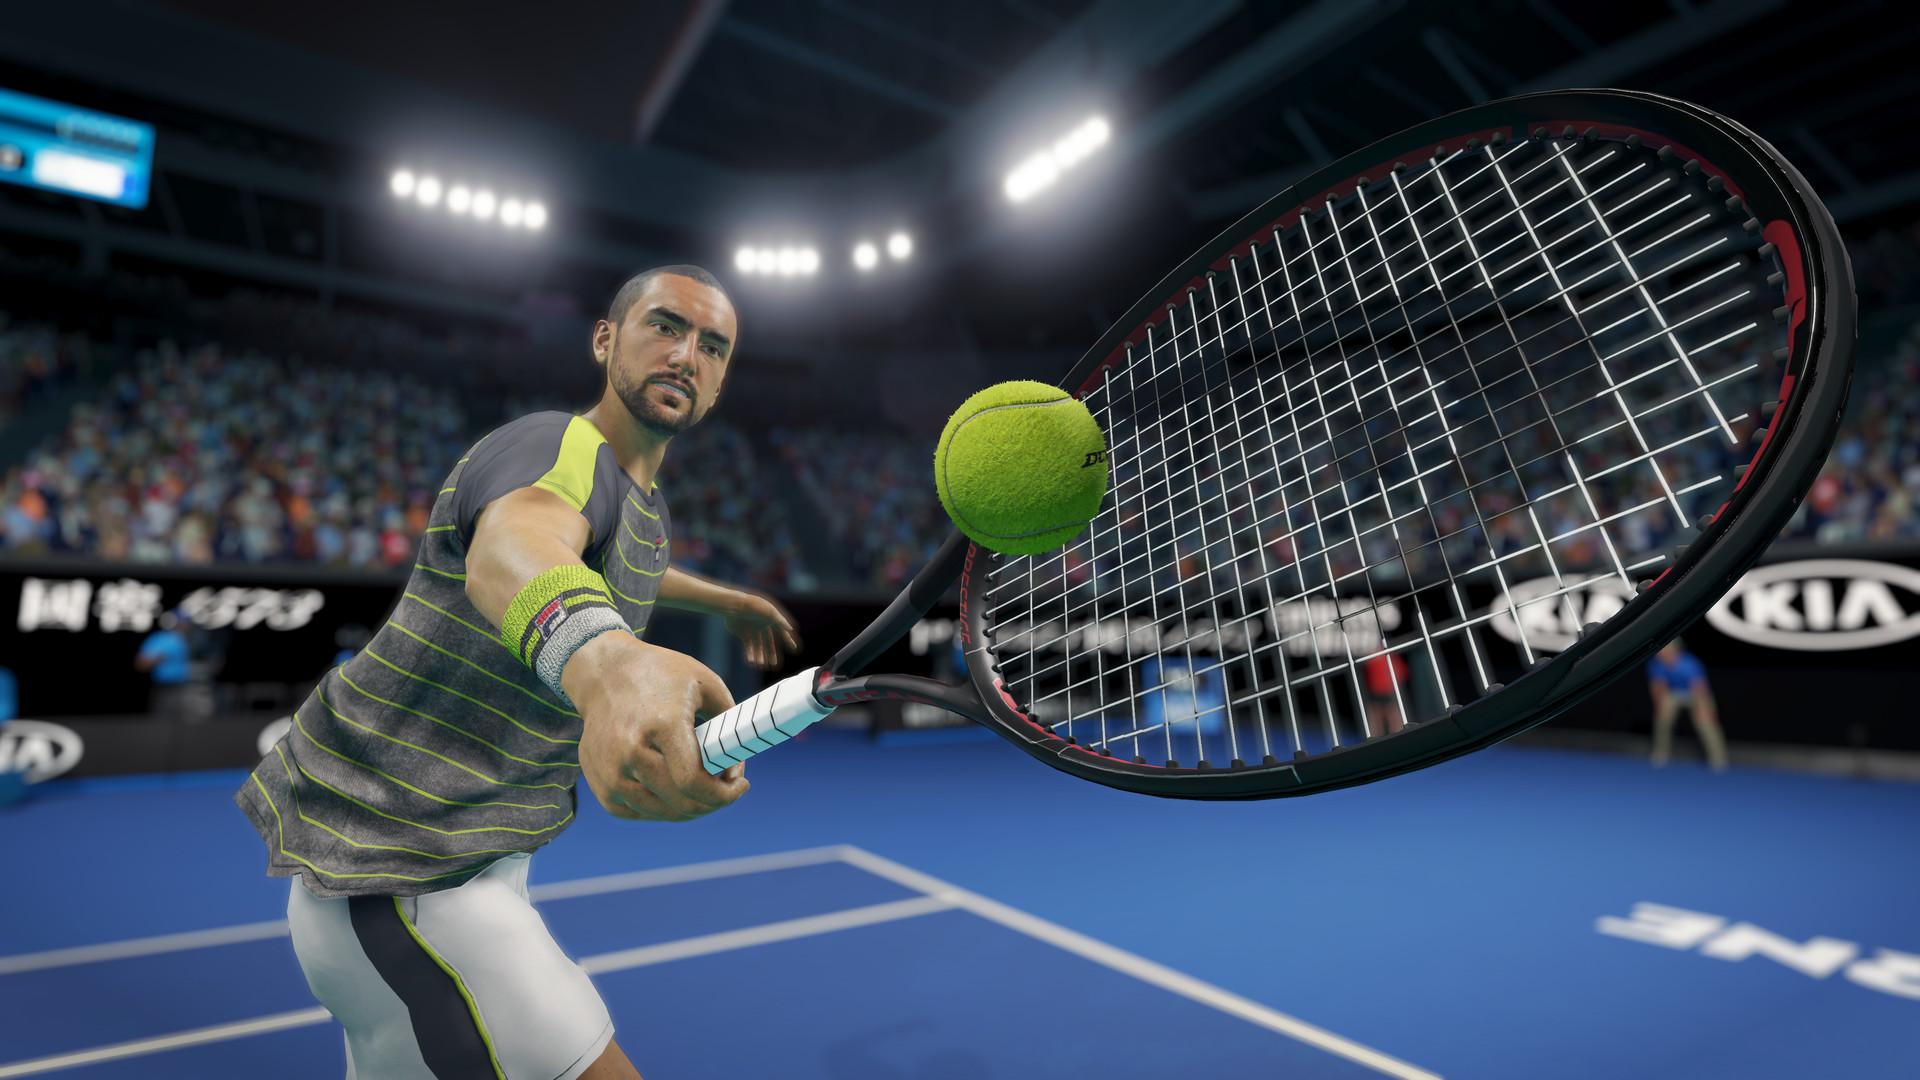 Save 75% on AO Tennis 2 on Steam